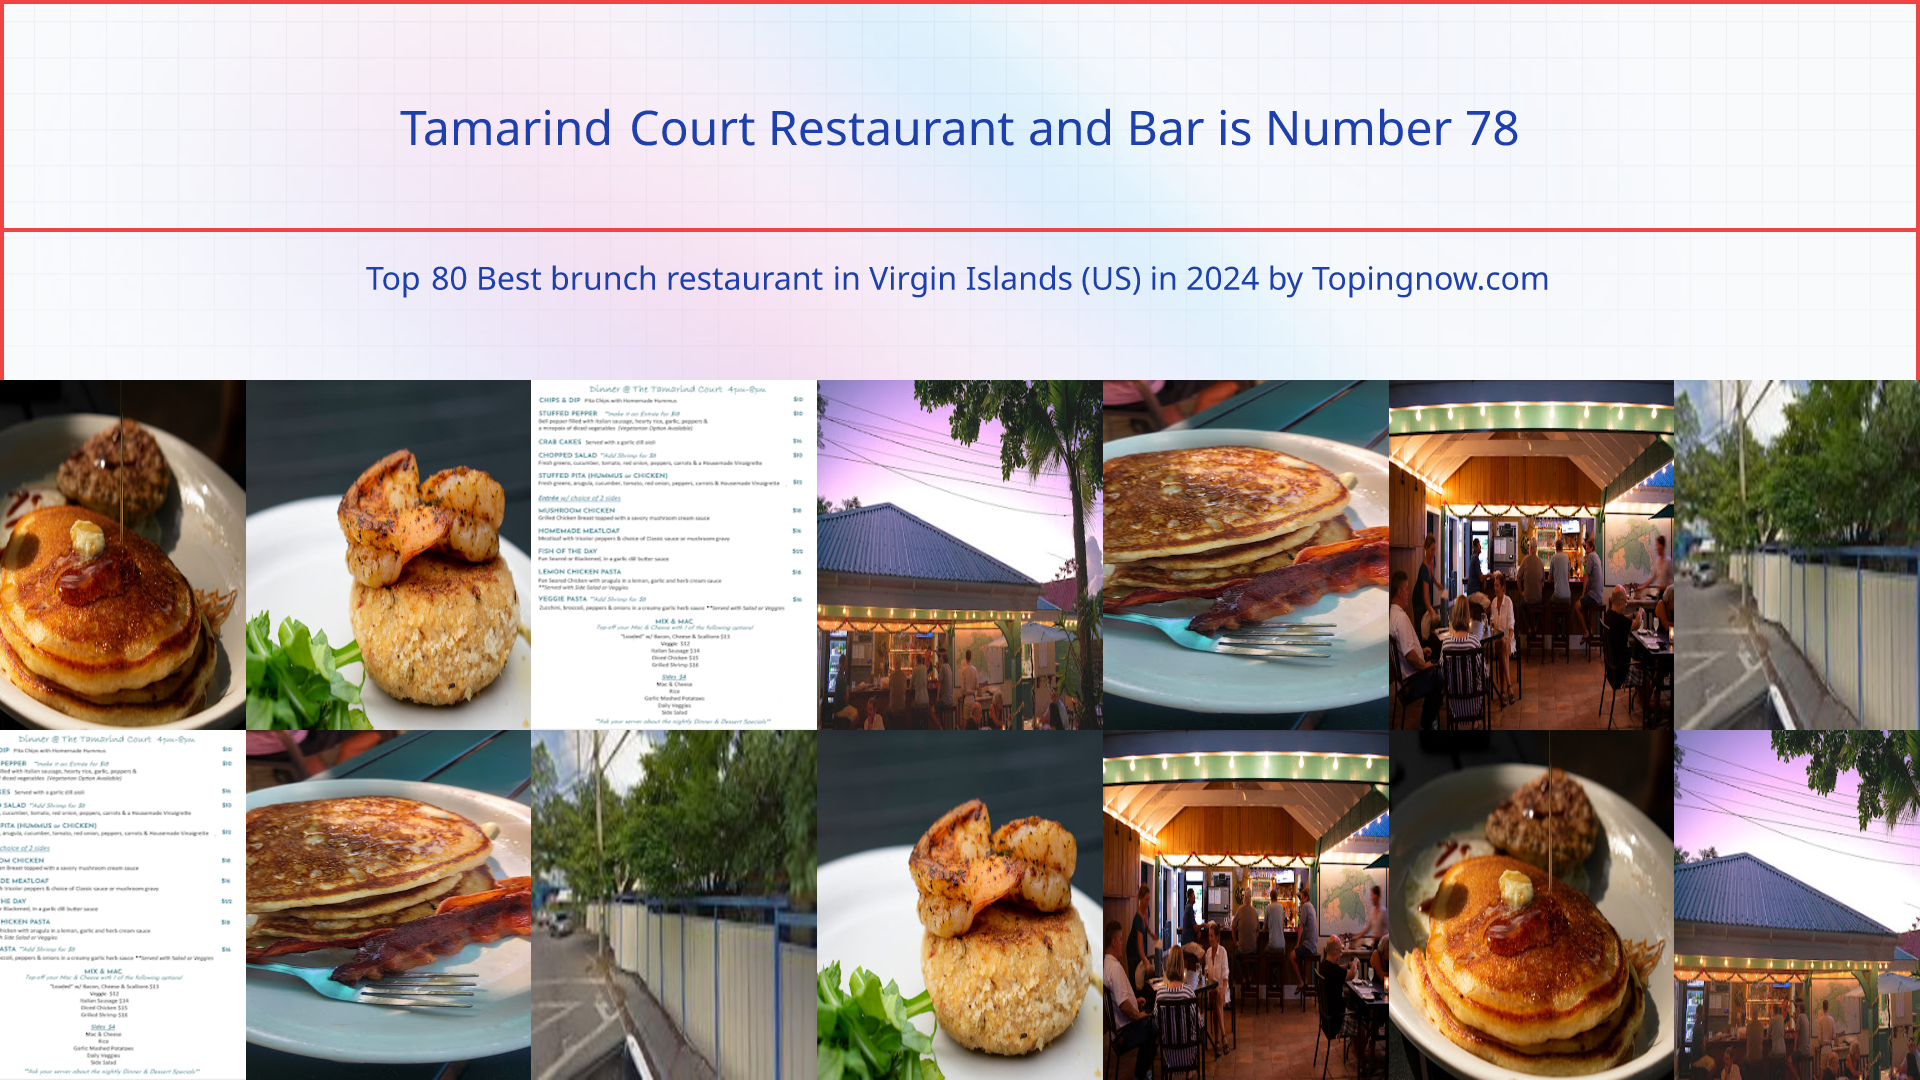 Tamarind Court Restaurant and Bar: Top 80 Best brunch restaurant in Virgin Islands (US) in 2024